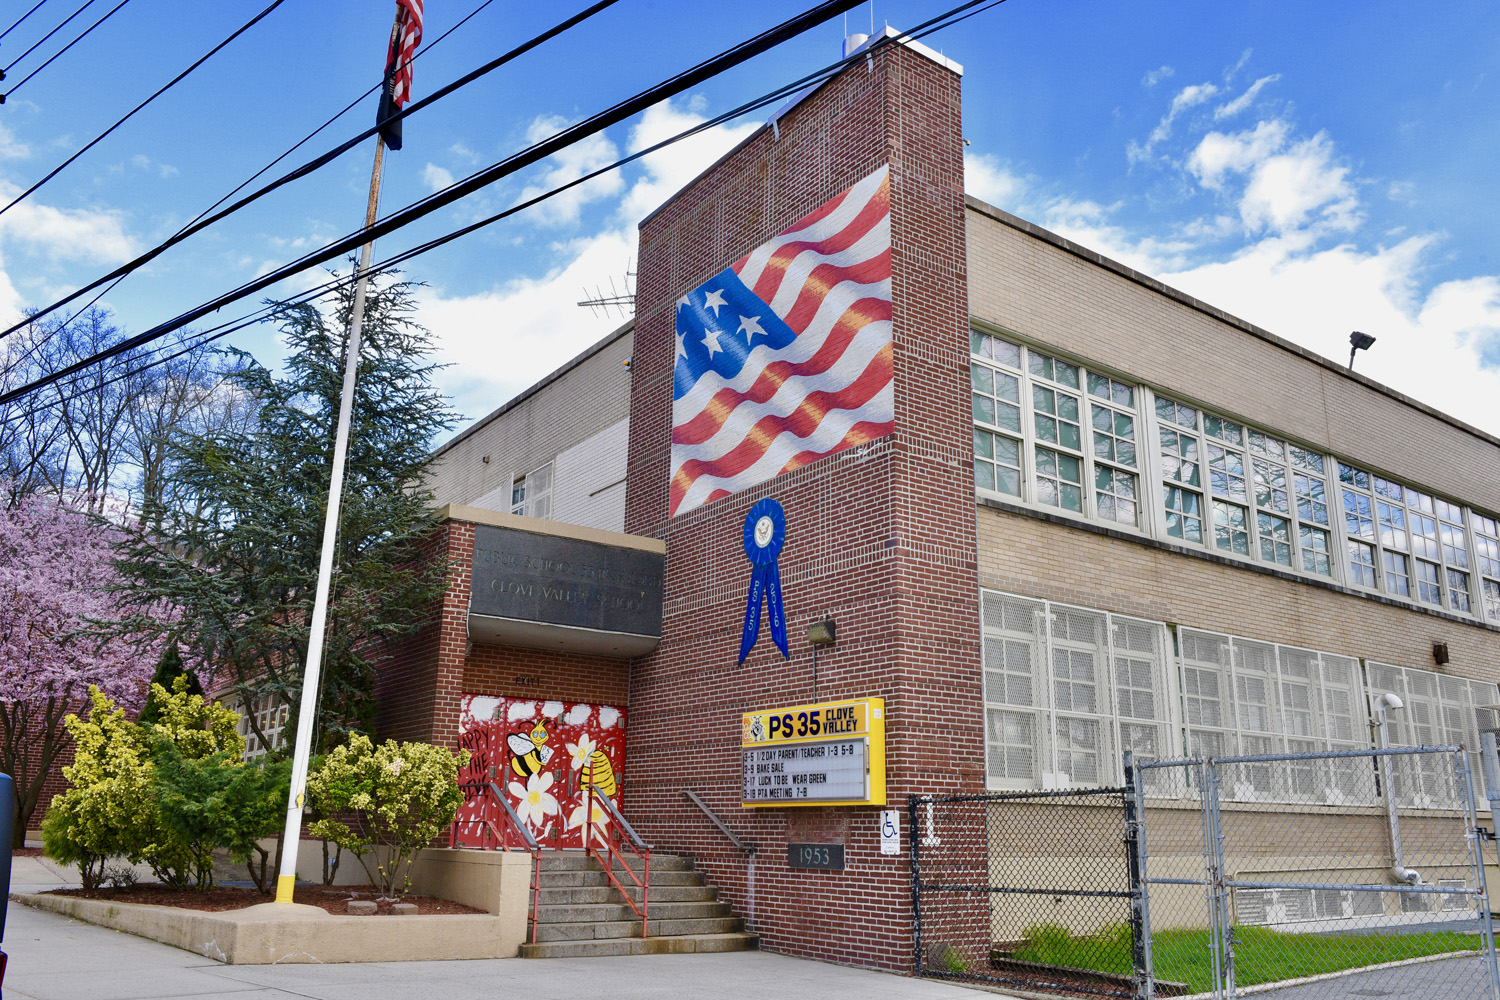 PS 35 Public School on Staten Island